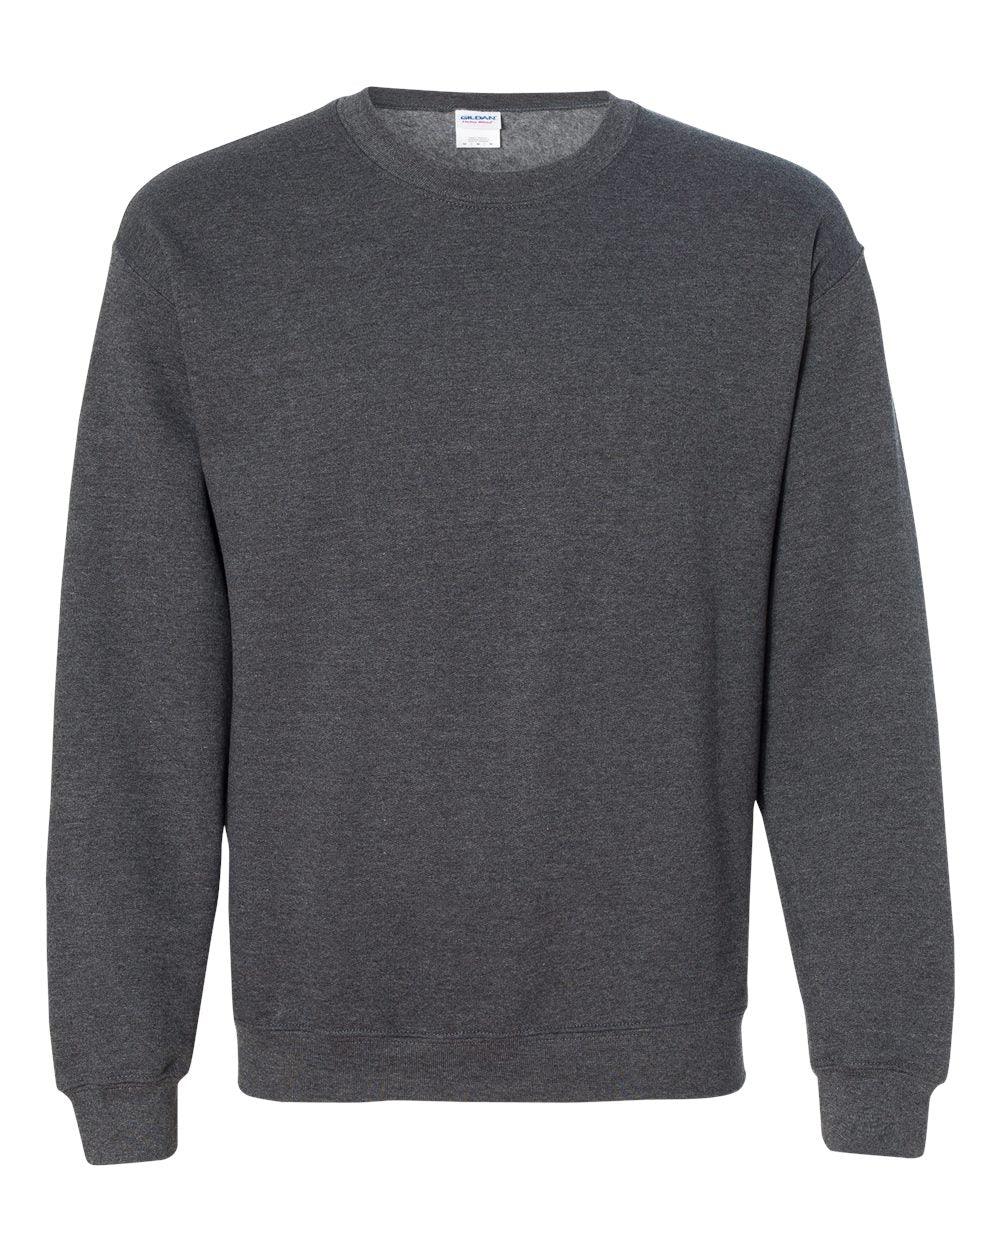 Heavy Blend™ Crewneck Sweatshirt - 18000 - Gildan - Leatherwood Trading Post